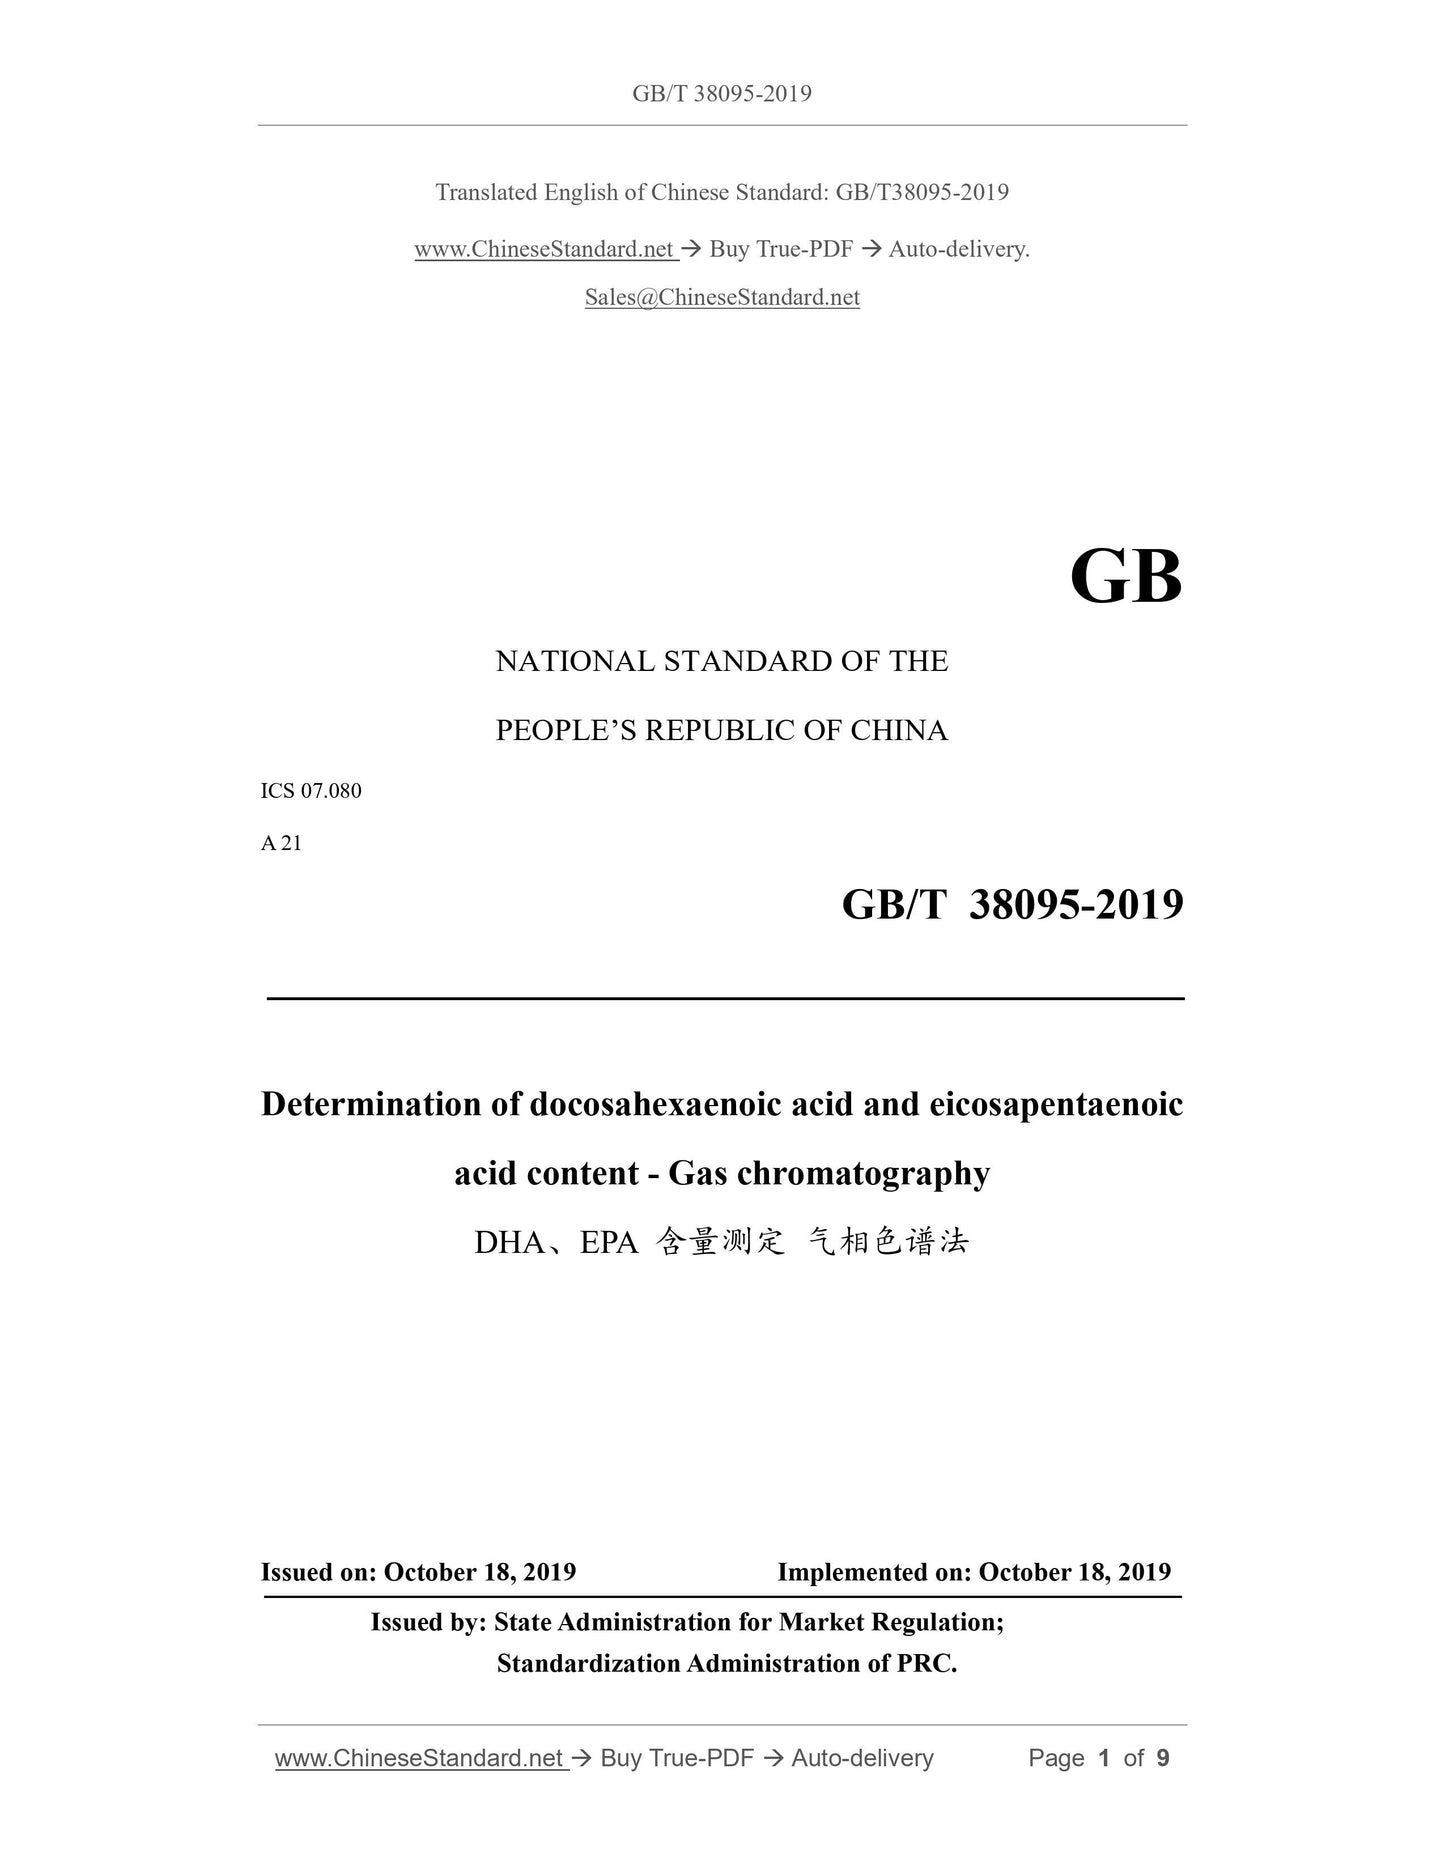 GBT38095-2019 Page 1